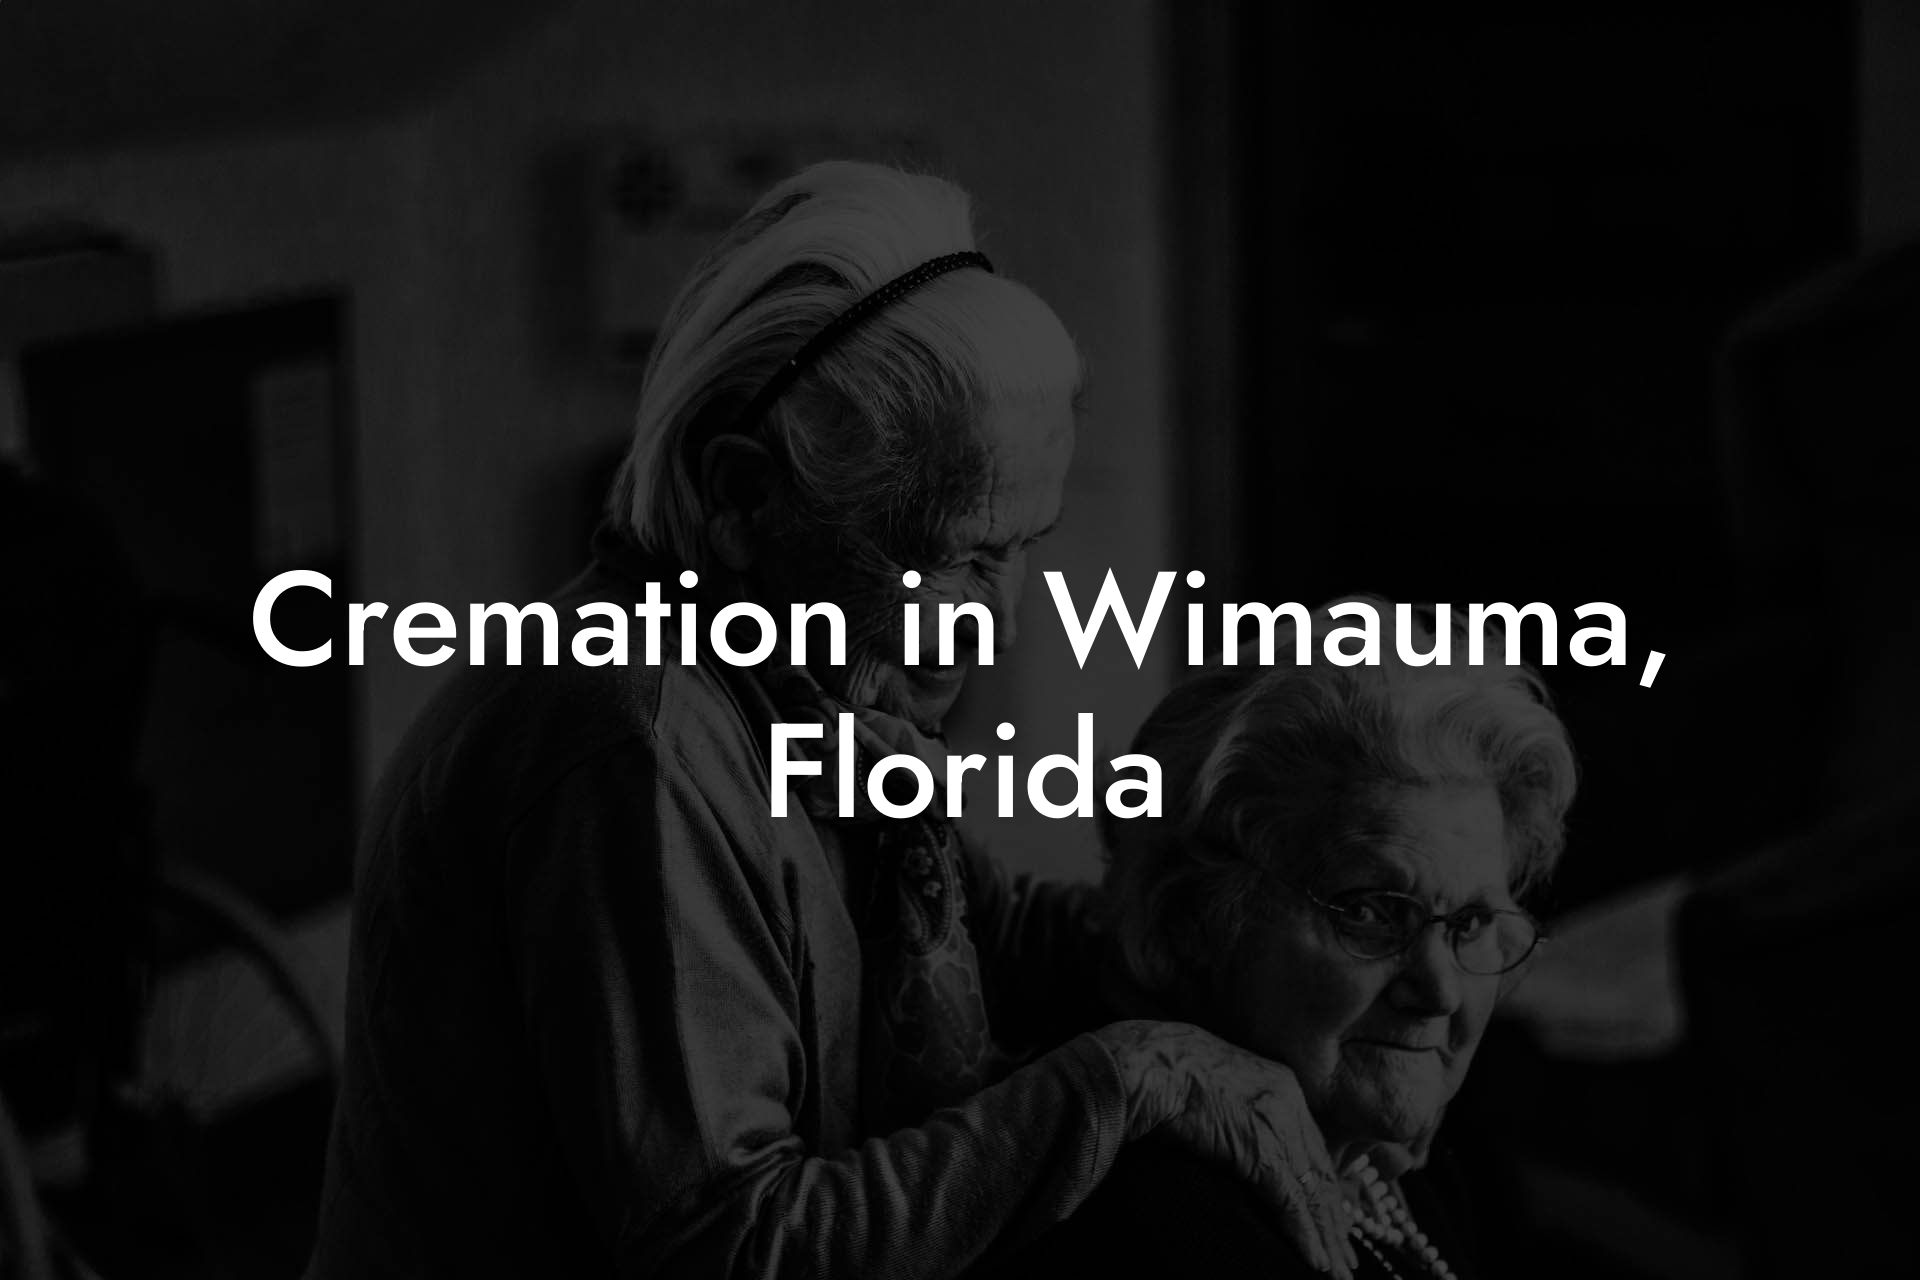 Cremation in Wimauma, Florida